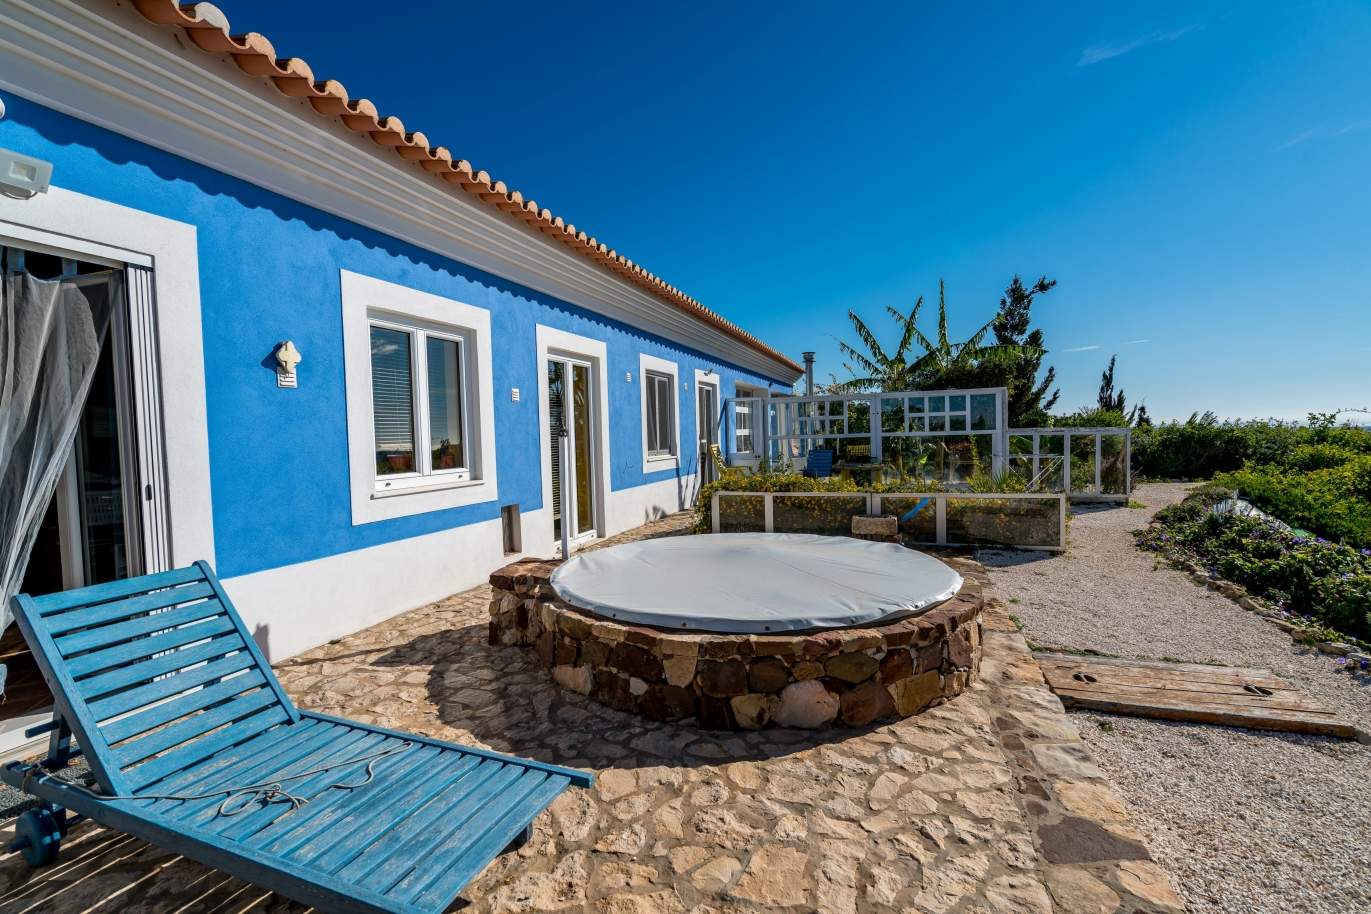 Verkauf von Immobilien, Meerblick, in Vila do Bispo, Algarve, Portugal_123084